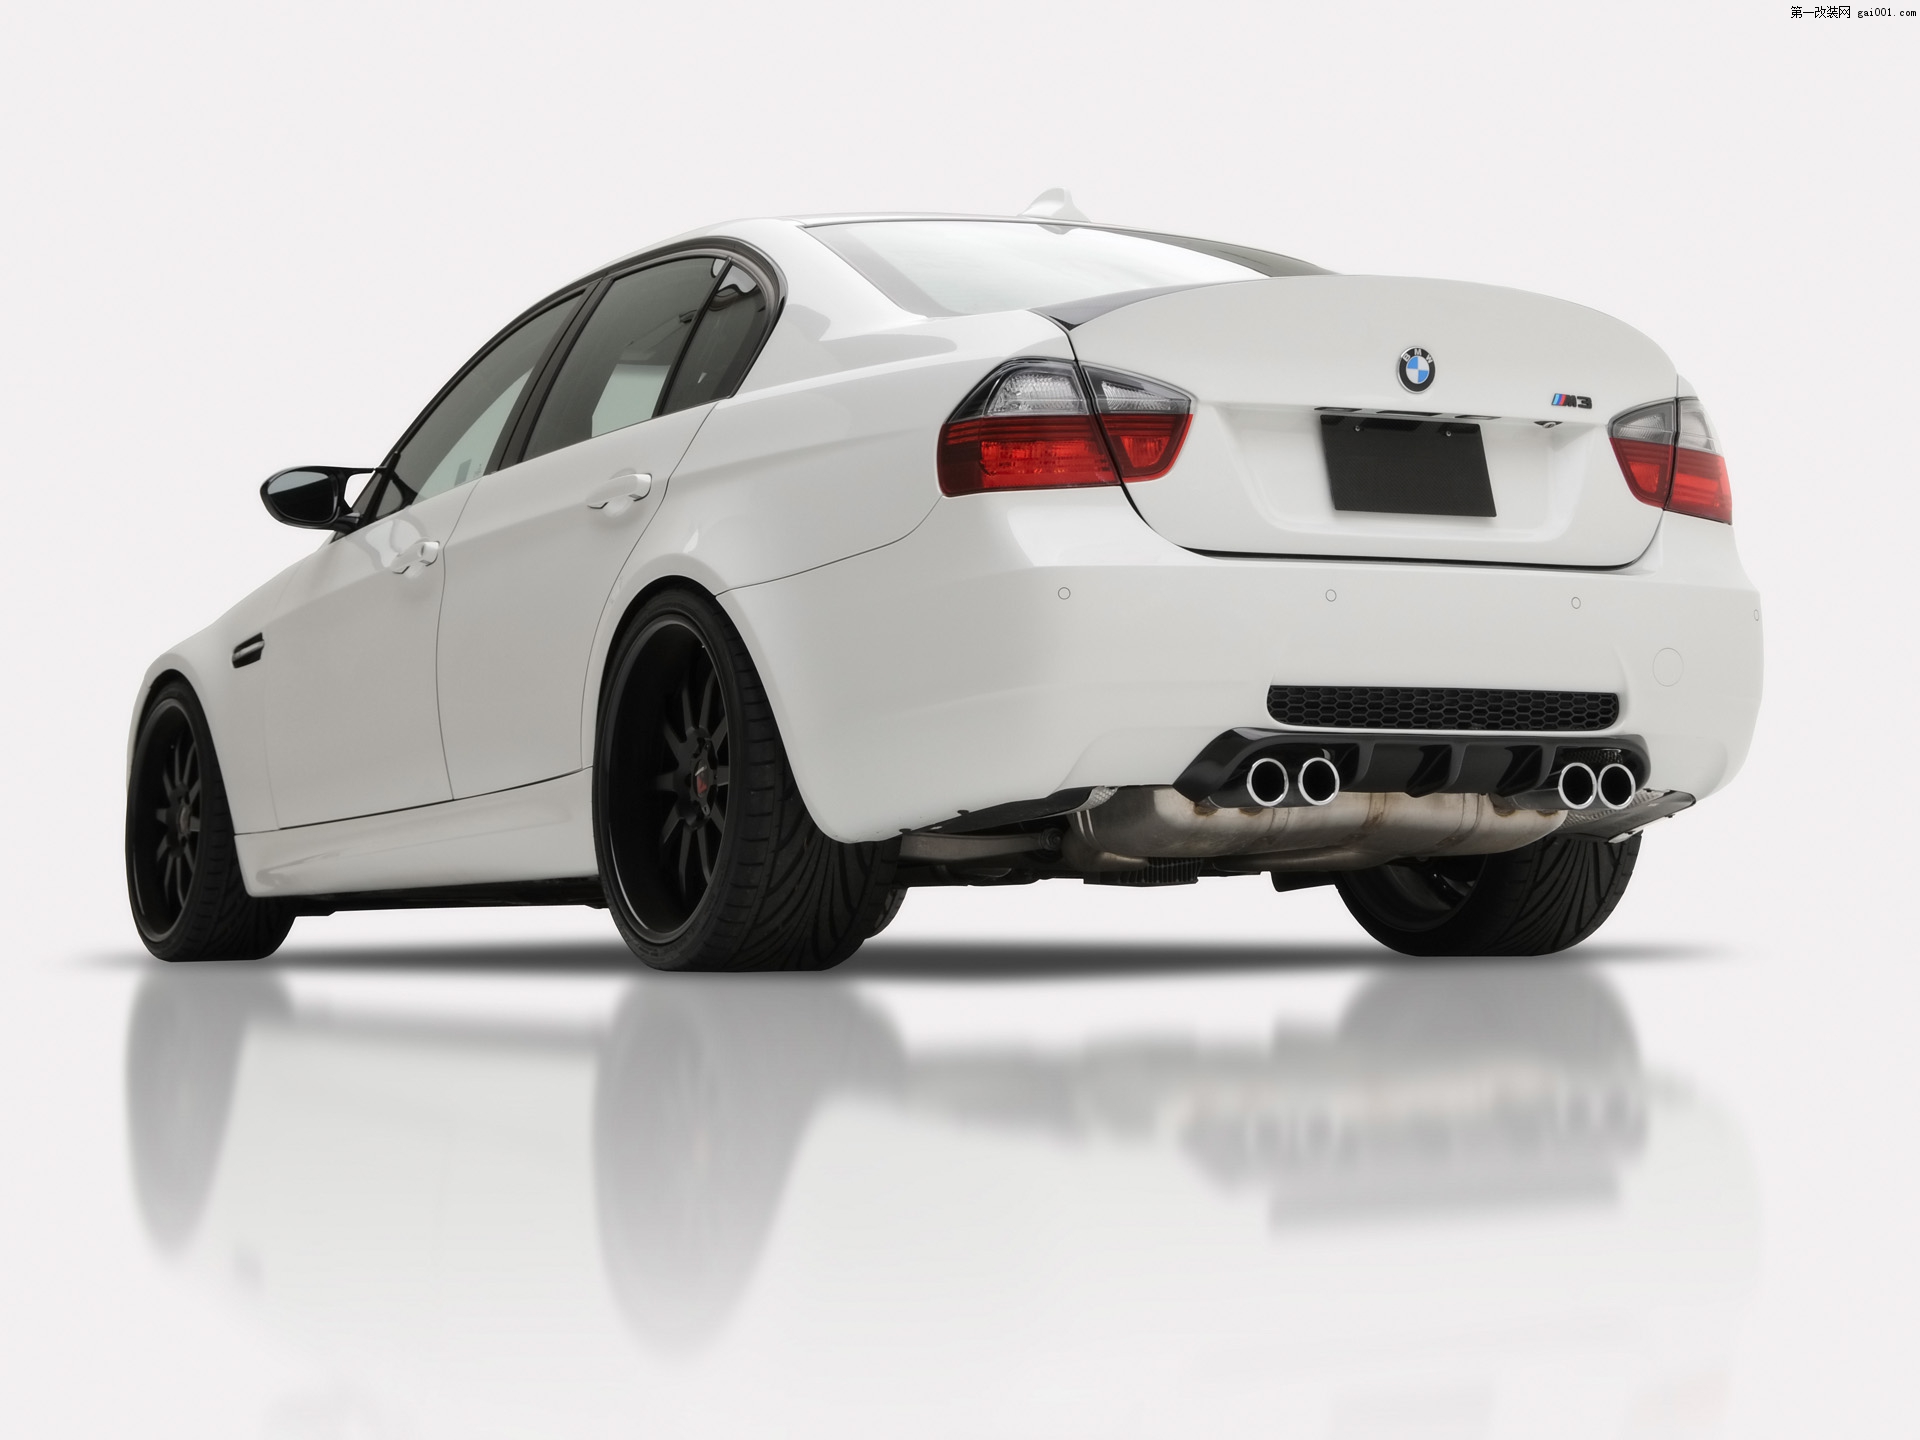 2009-Vorsteiner-BMW-E90-M3-Sedan-Rear-Angle-1920x1440.jpg